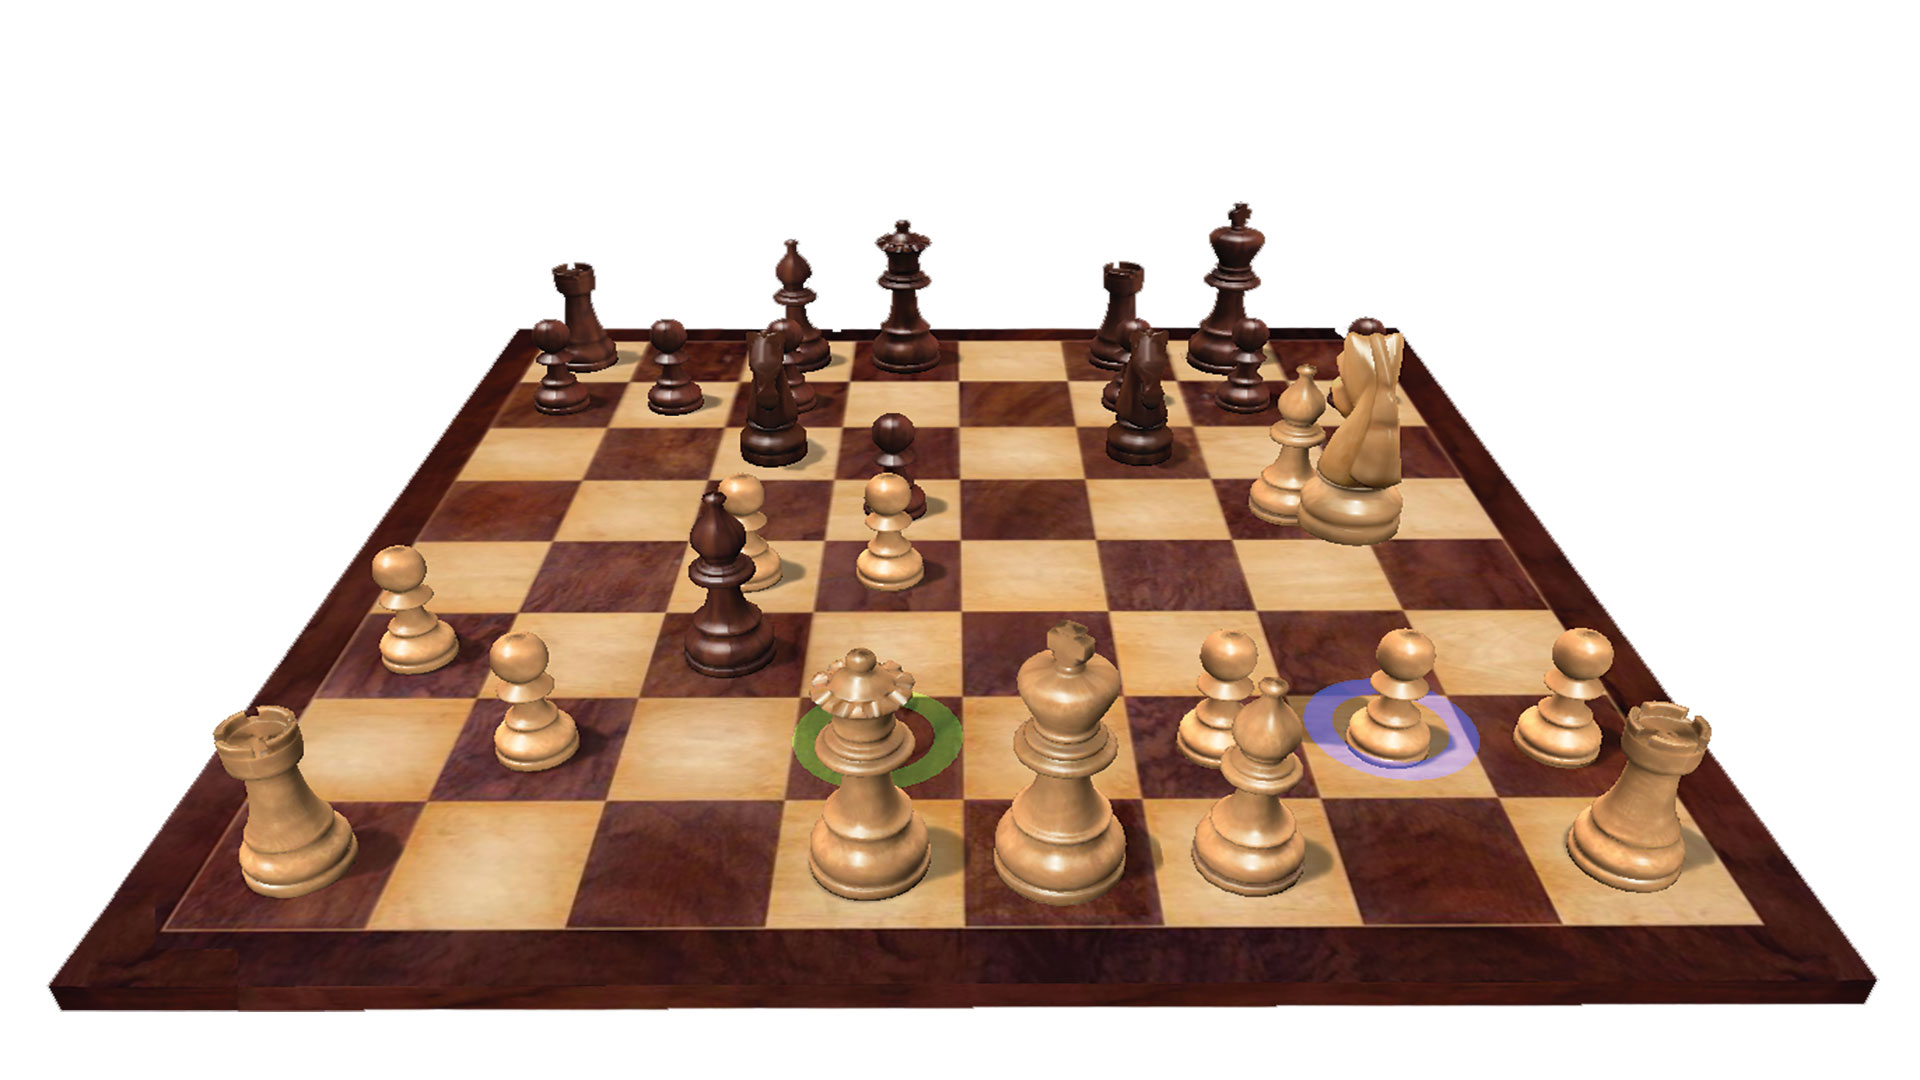 fritz chess analysis online